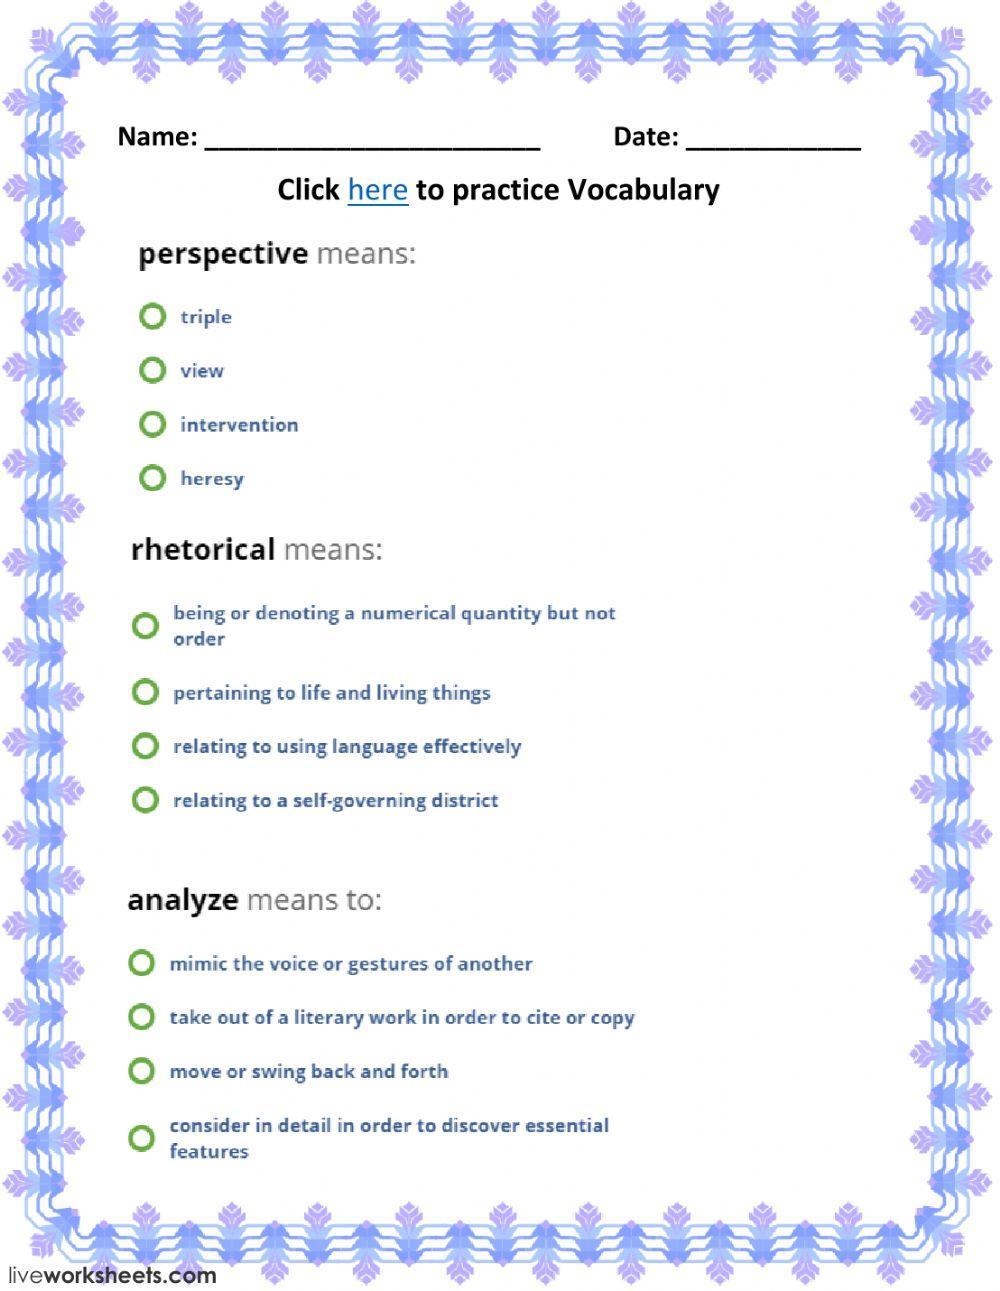 Vocabulary-3